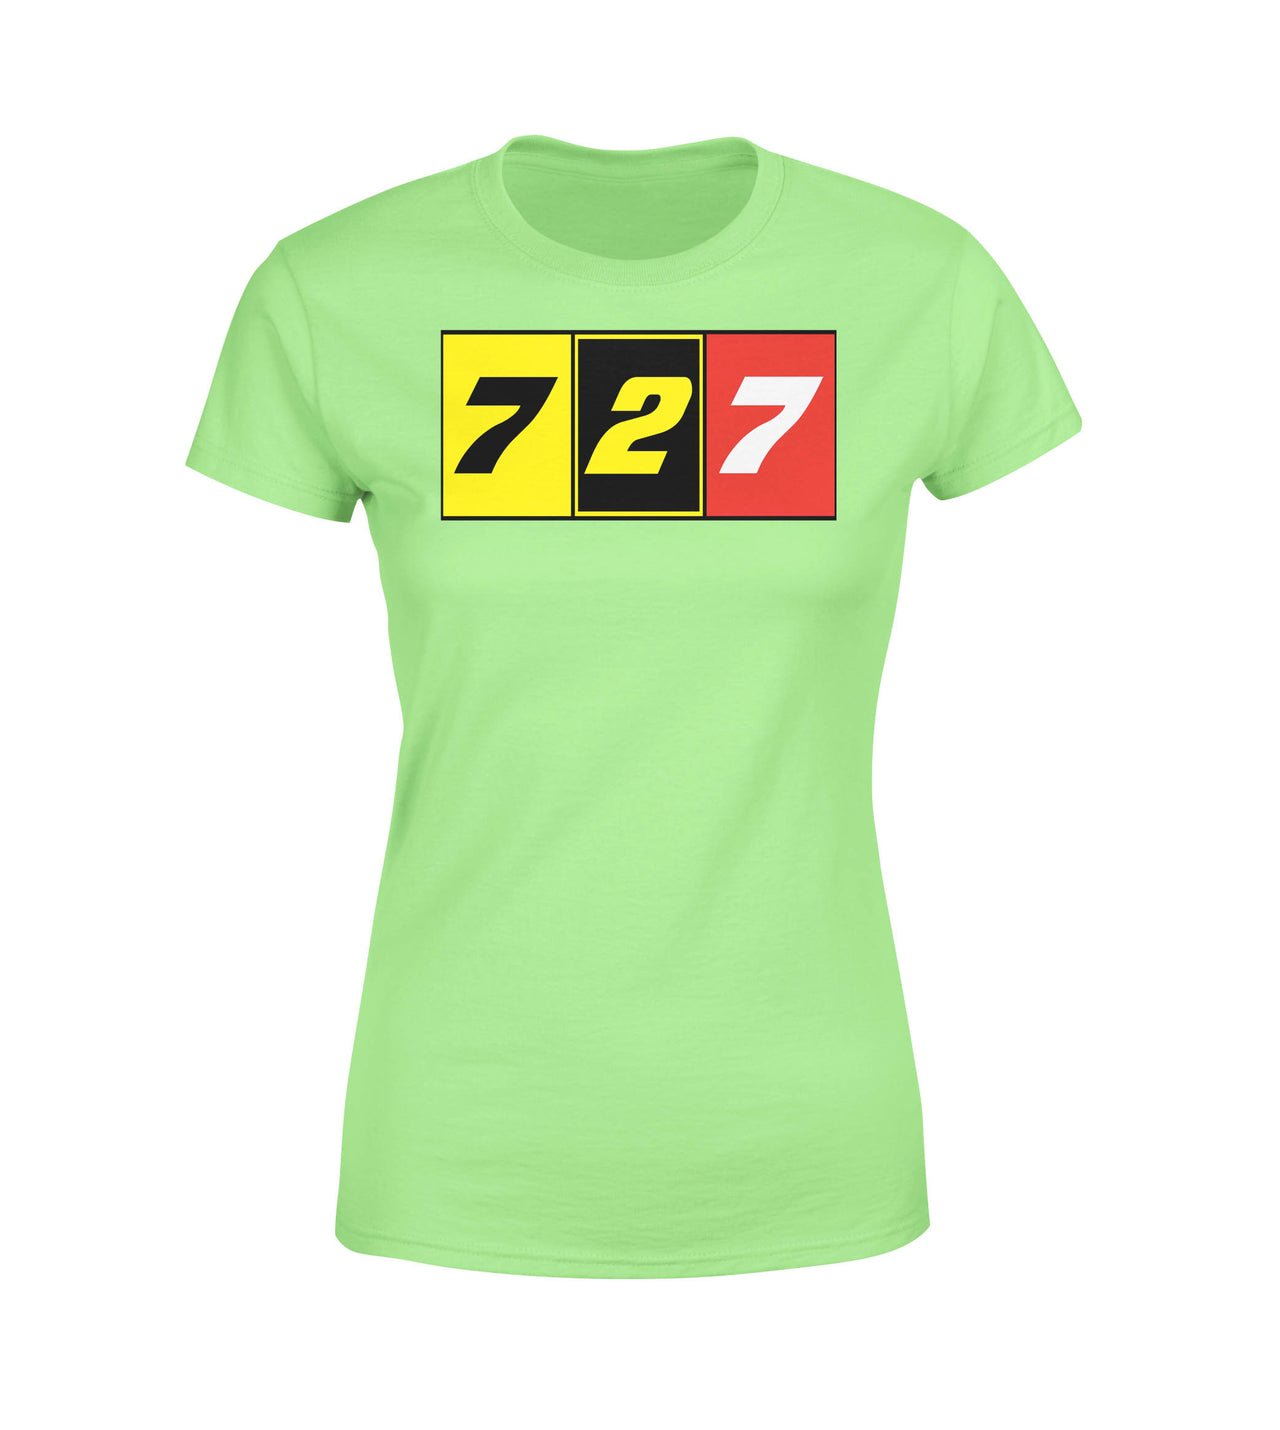 Flat Colourful 727 Designed Women T-Shirts